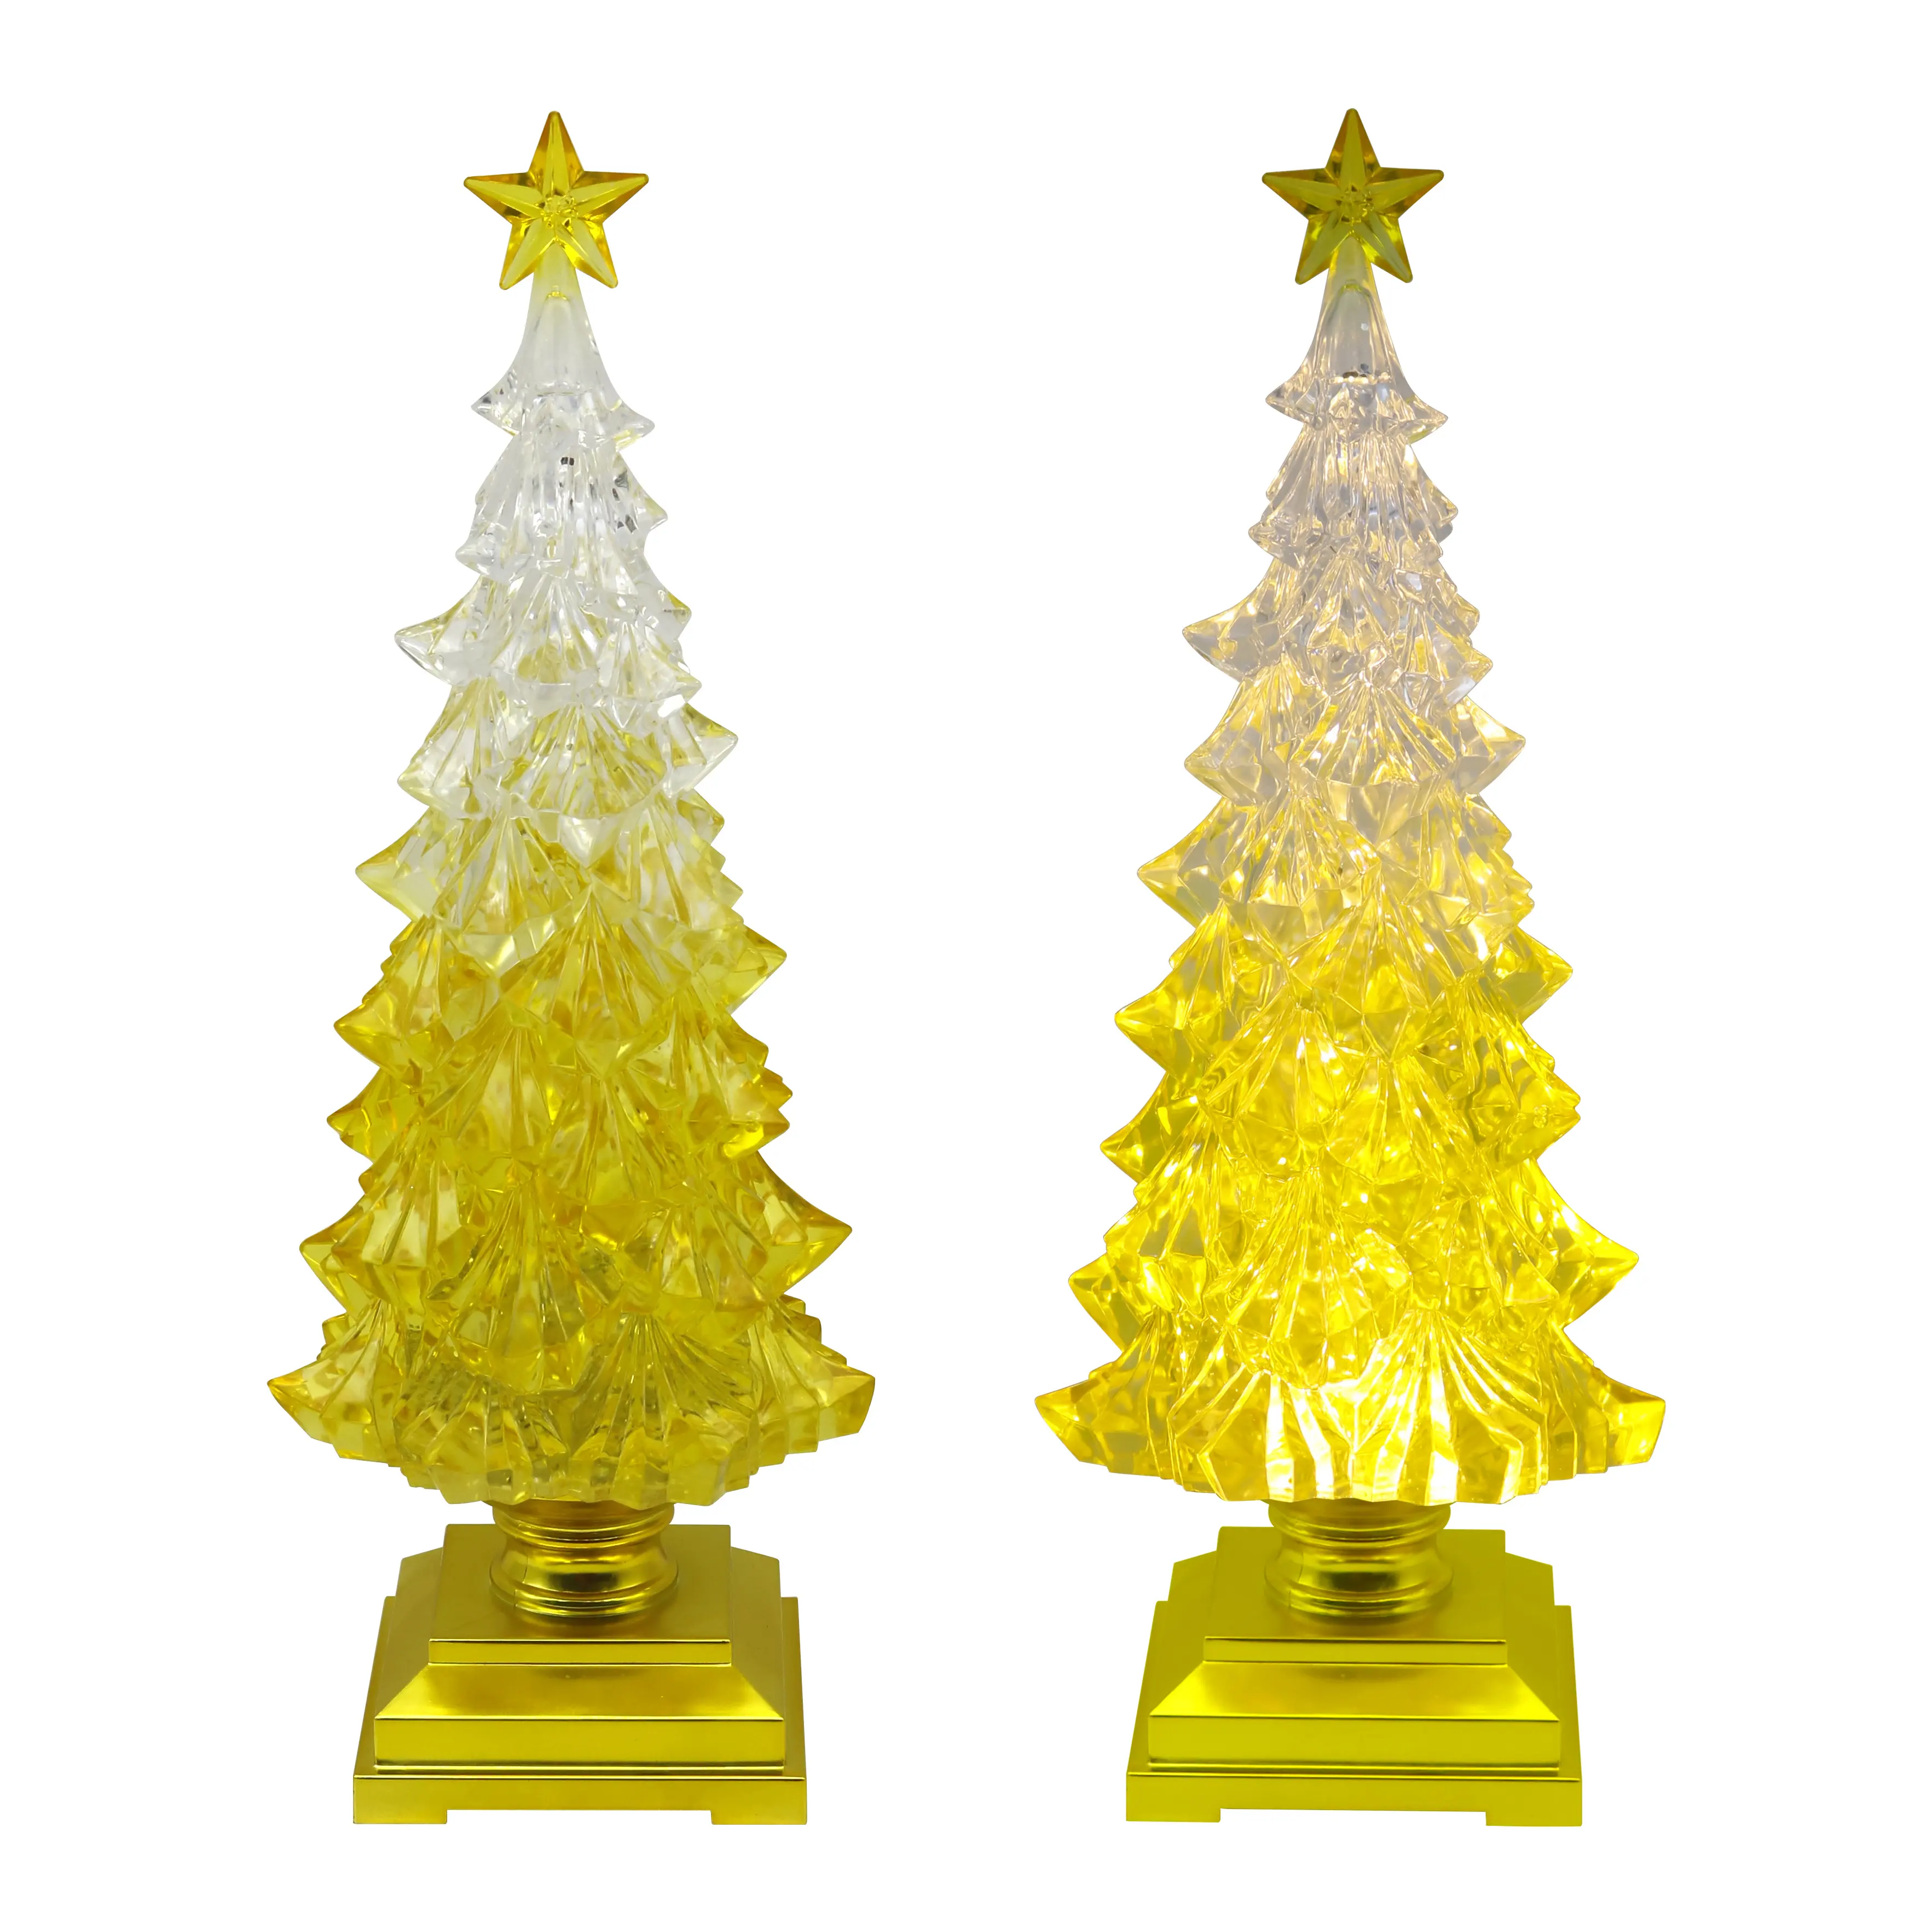 TIANHUA atacado Árvore De Natal Formas Tabletop Enfeites De Vidro Árvore De Natal Levou Luzes De Vidro Árvores De Natal Ornamentos De Vidro